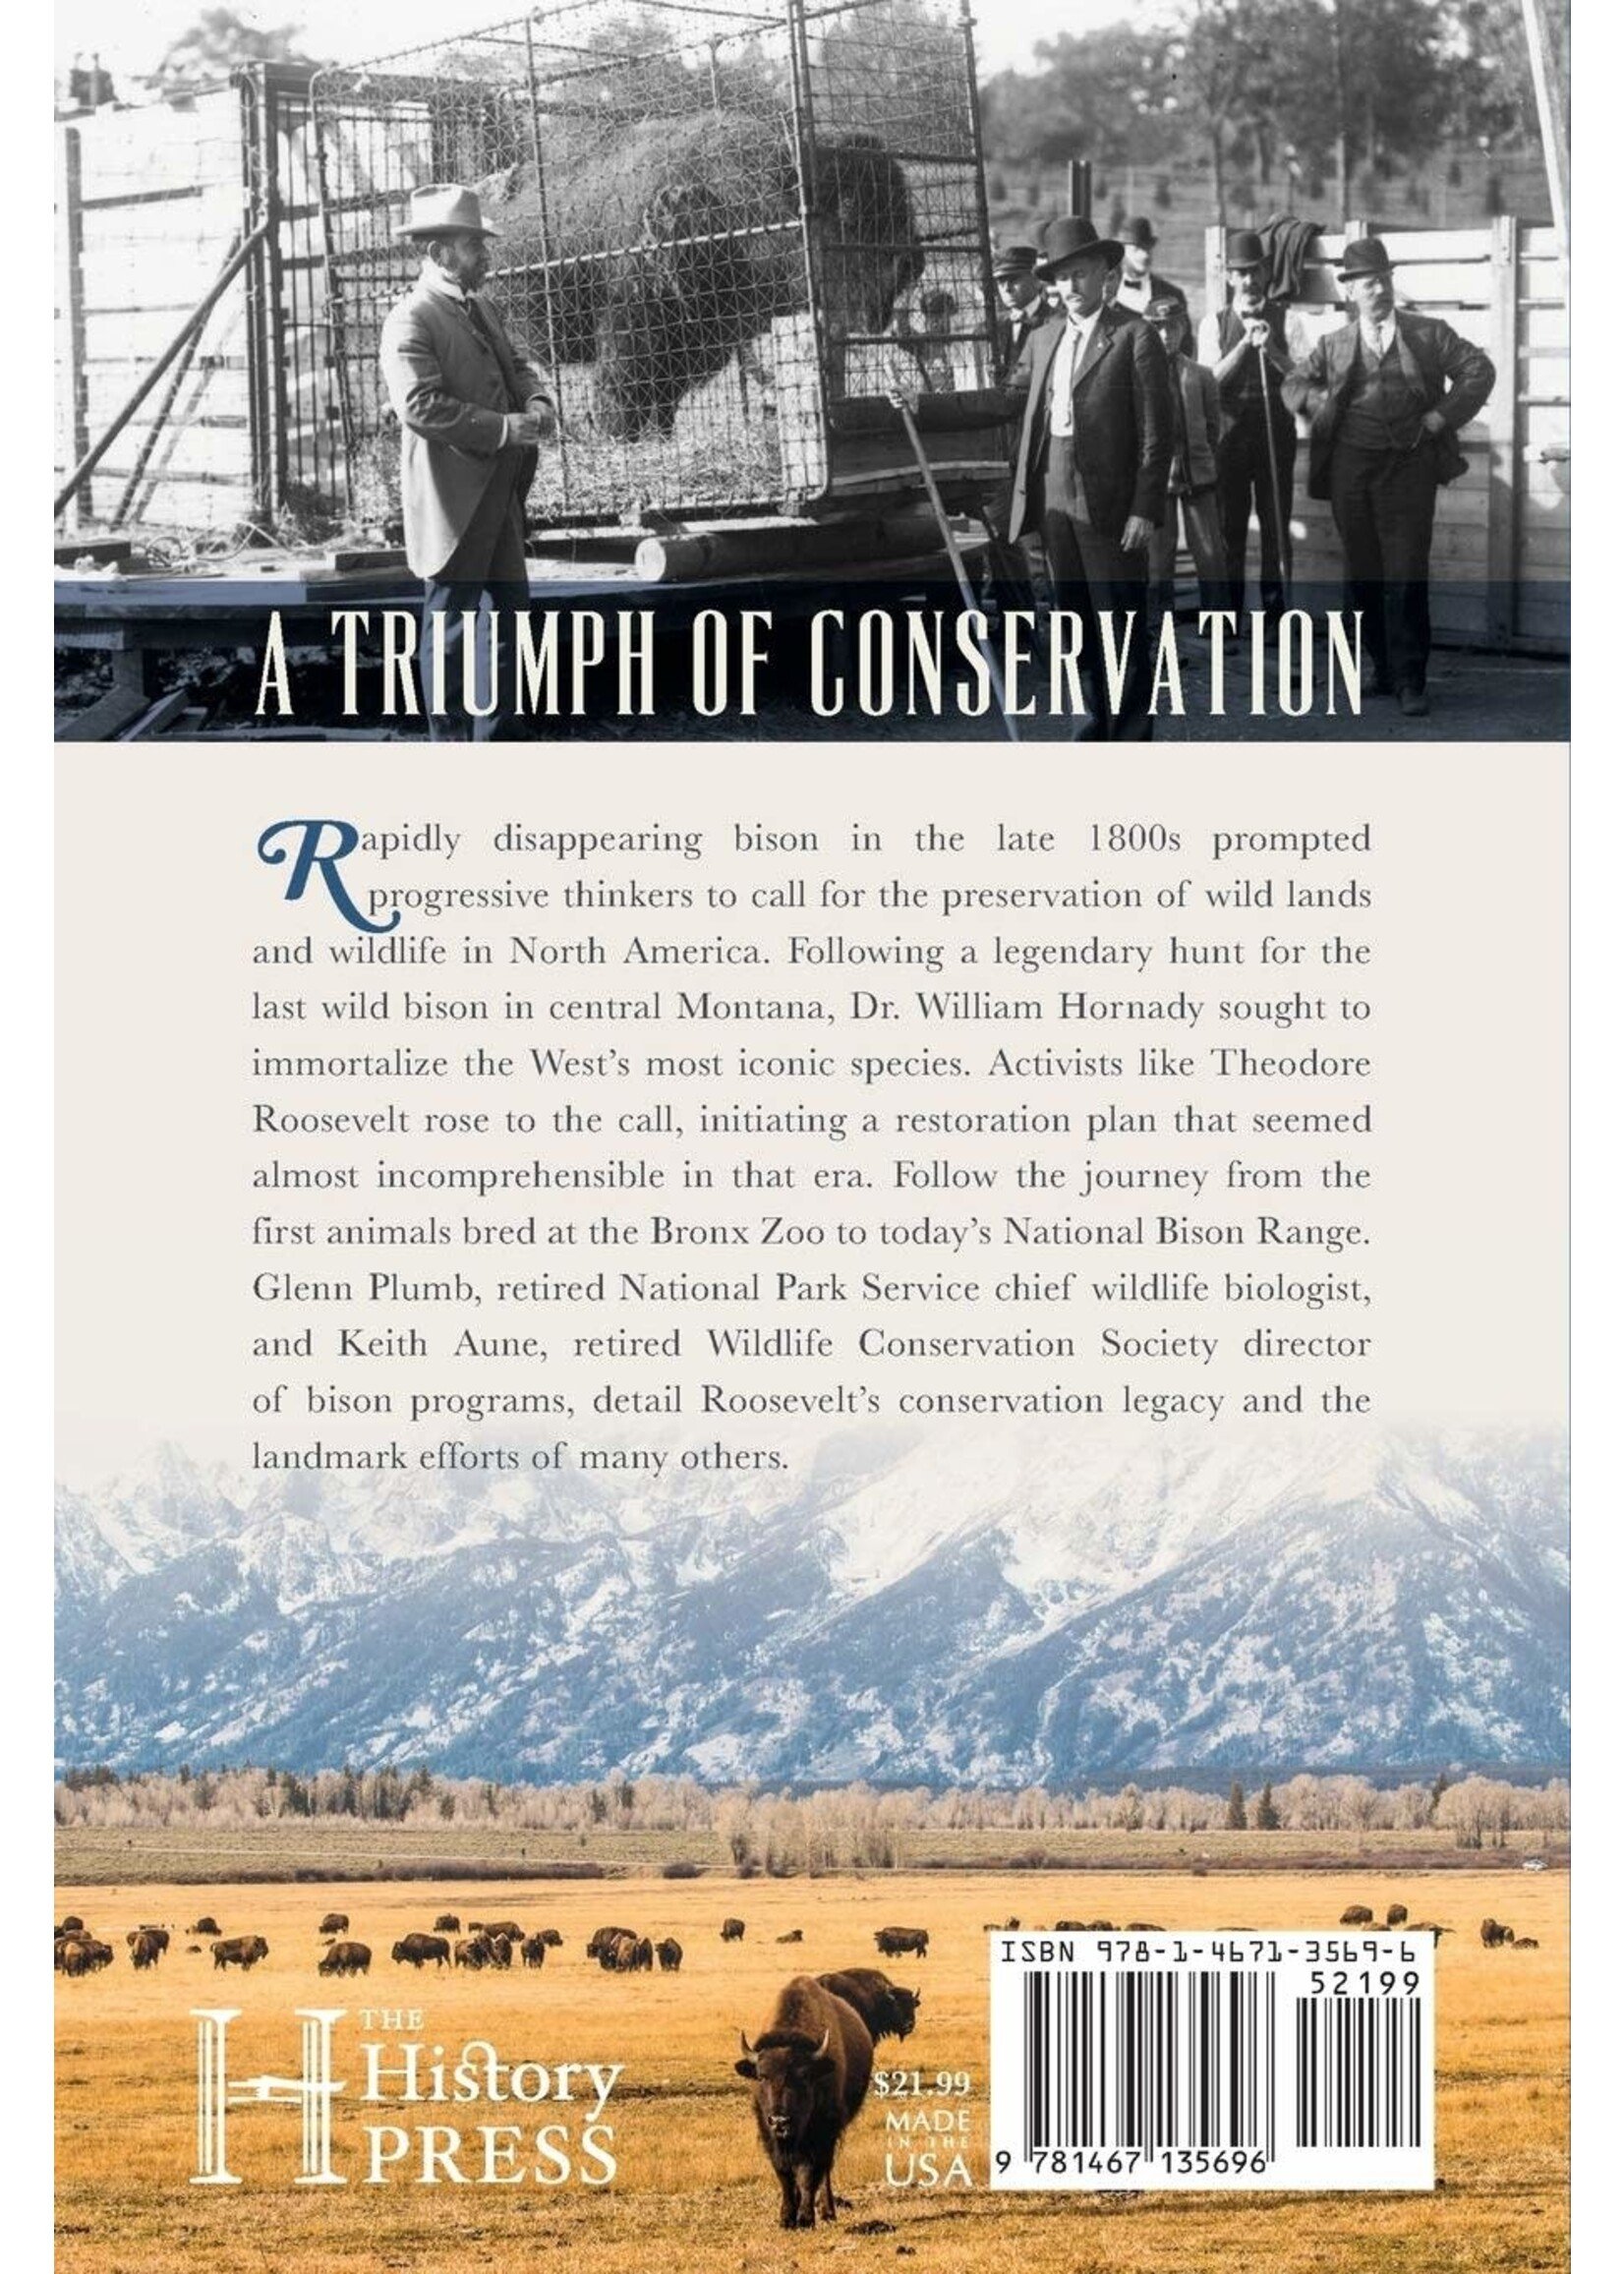 Theodore Roosevelt & Bison Restoration on the Great Plains